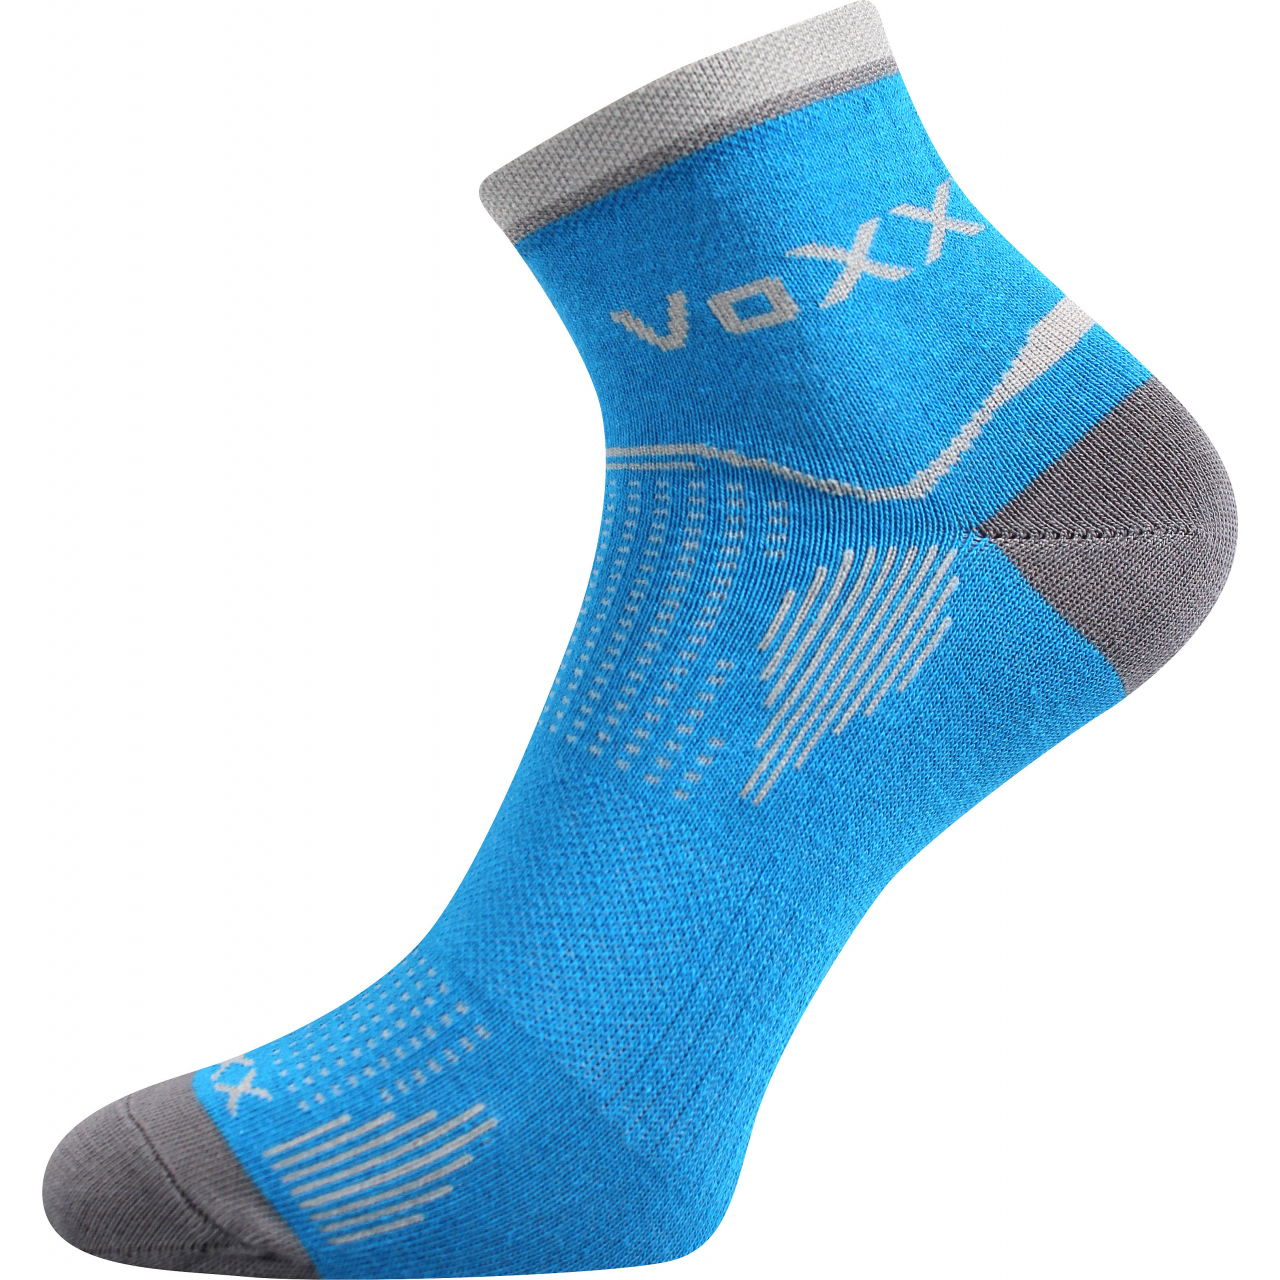 Ponožky unisex sportovní Voxx Sirius - modré, 43-46